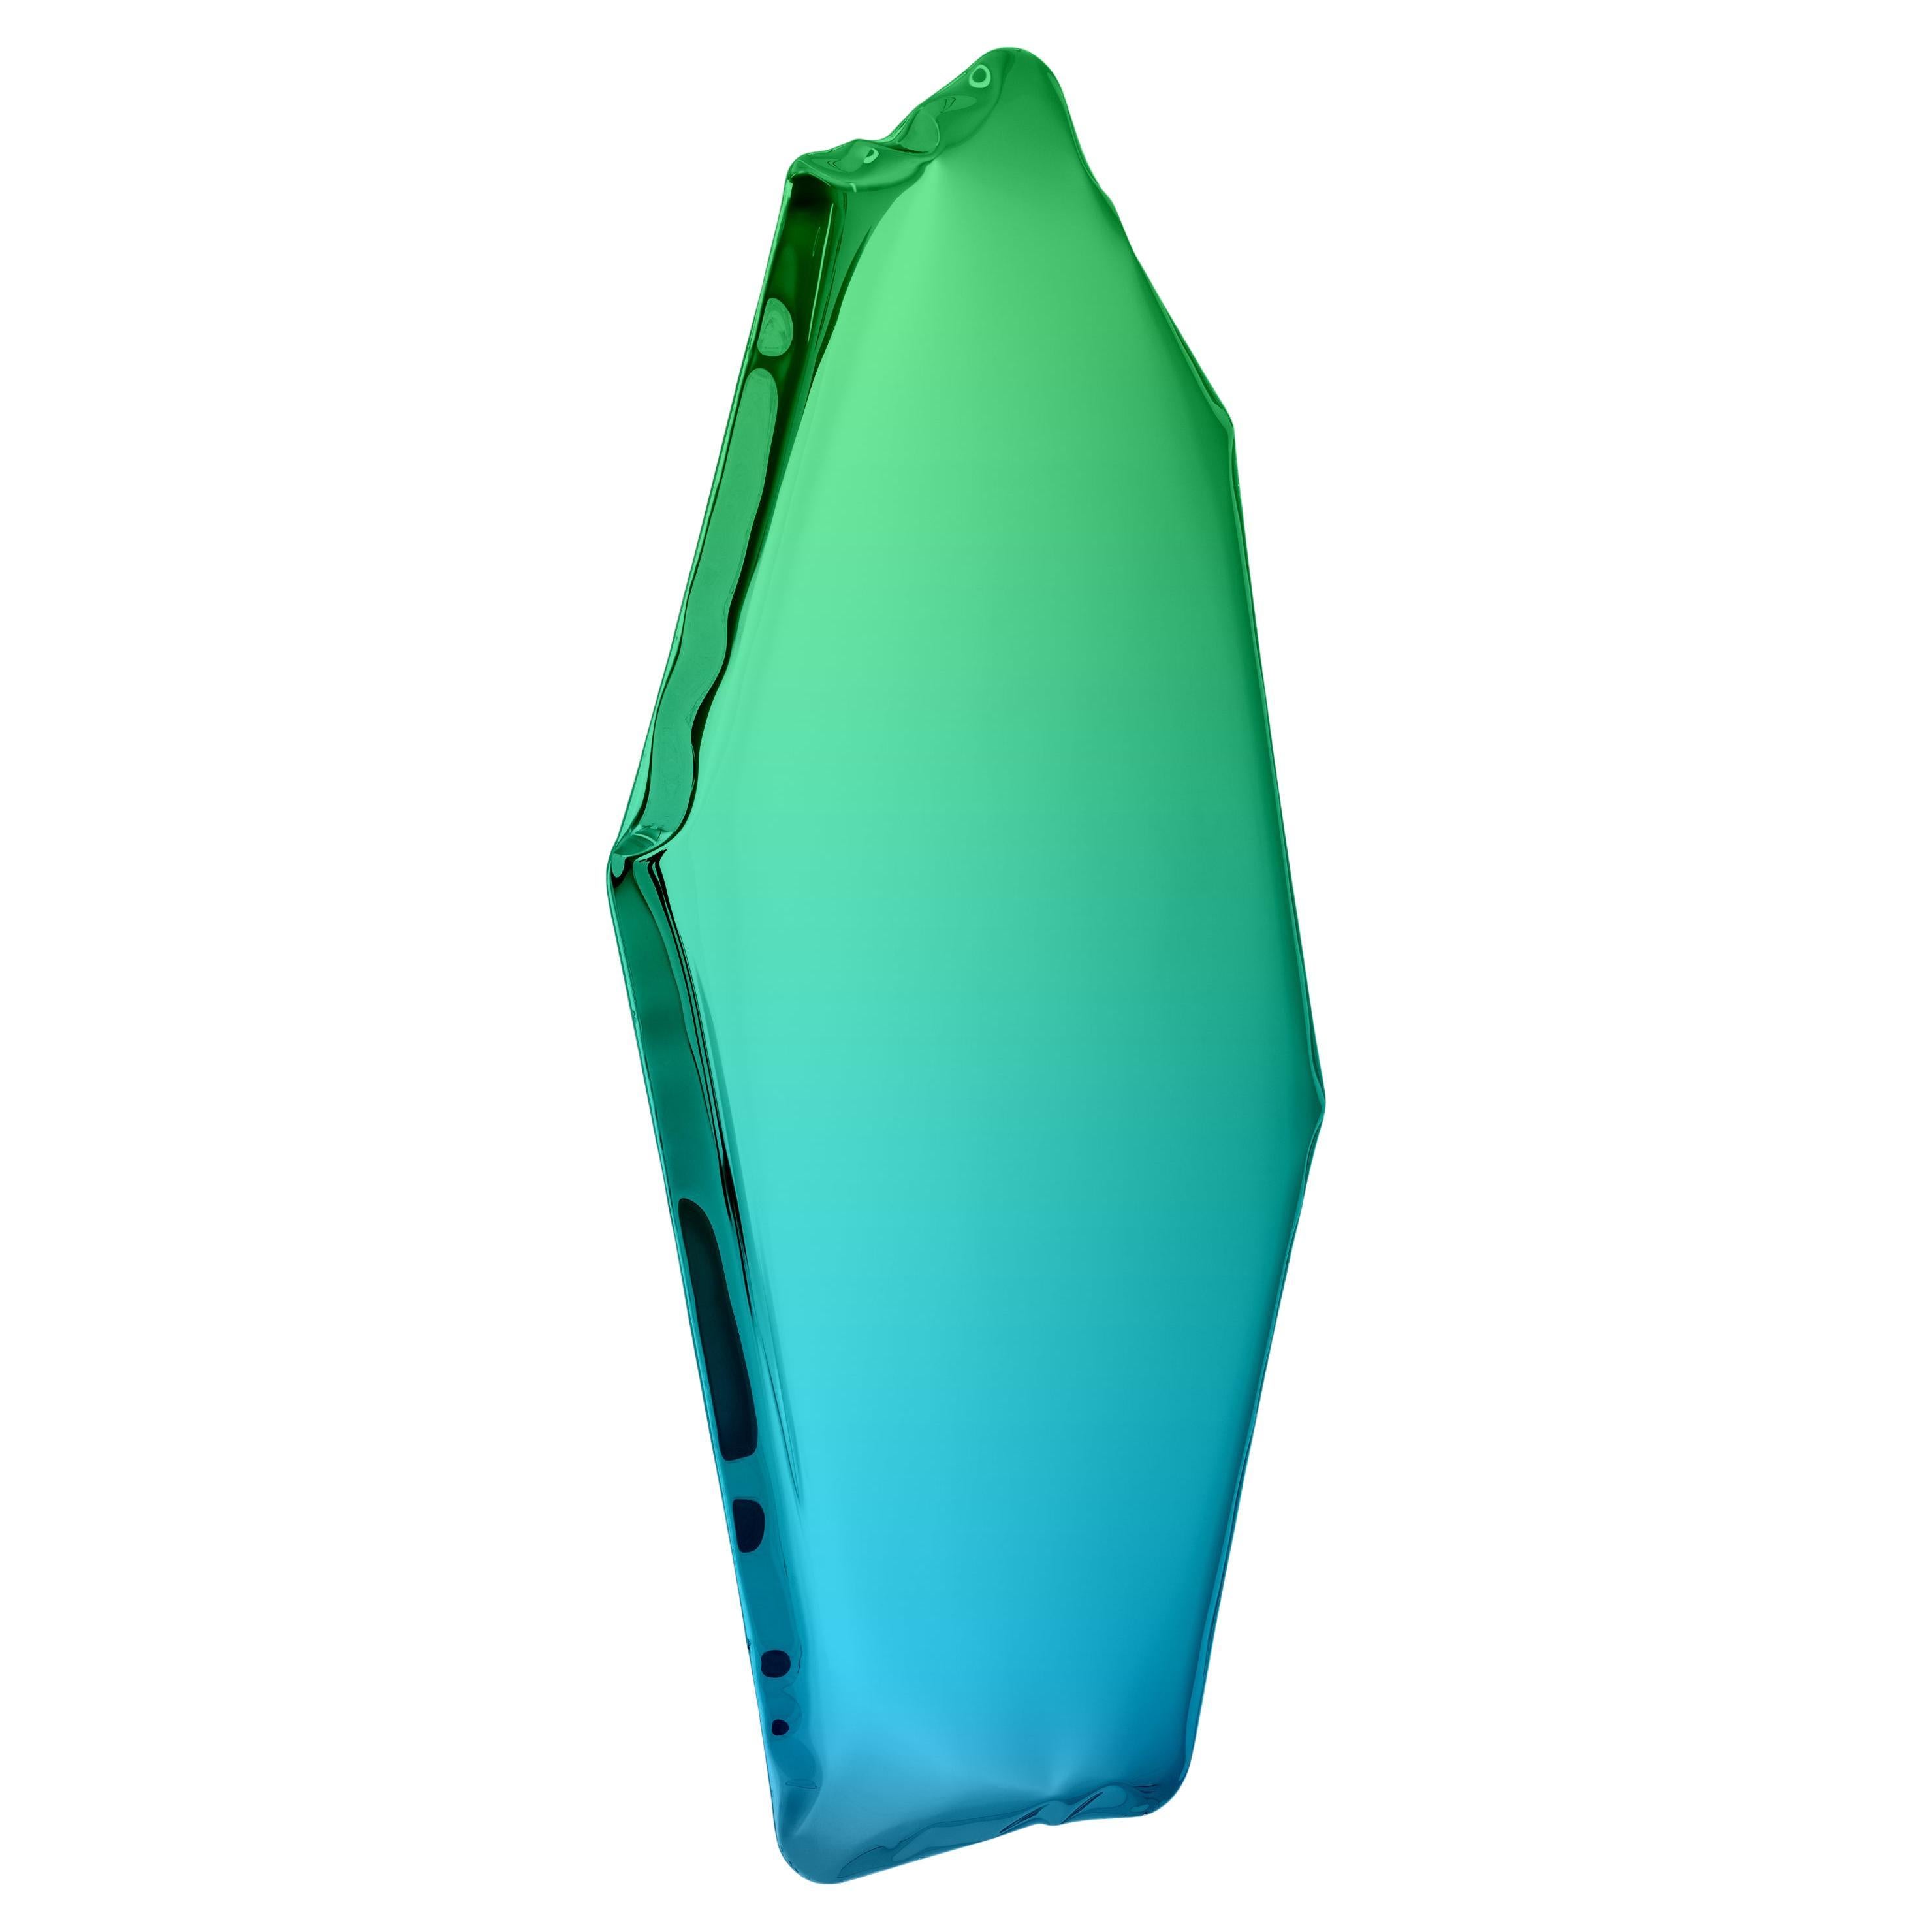 Sapphire Emerald Tafla C4 Sculptural Wall Mirror by Zieta For Sale